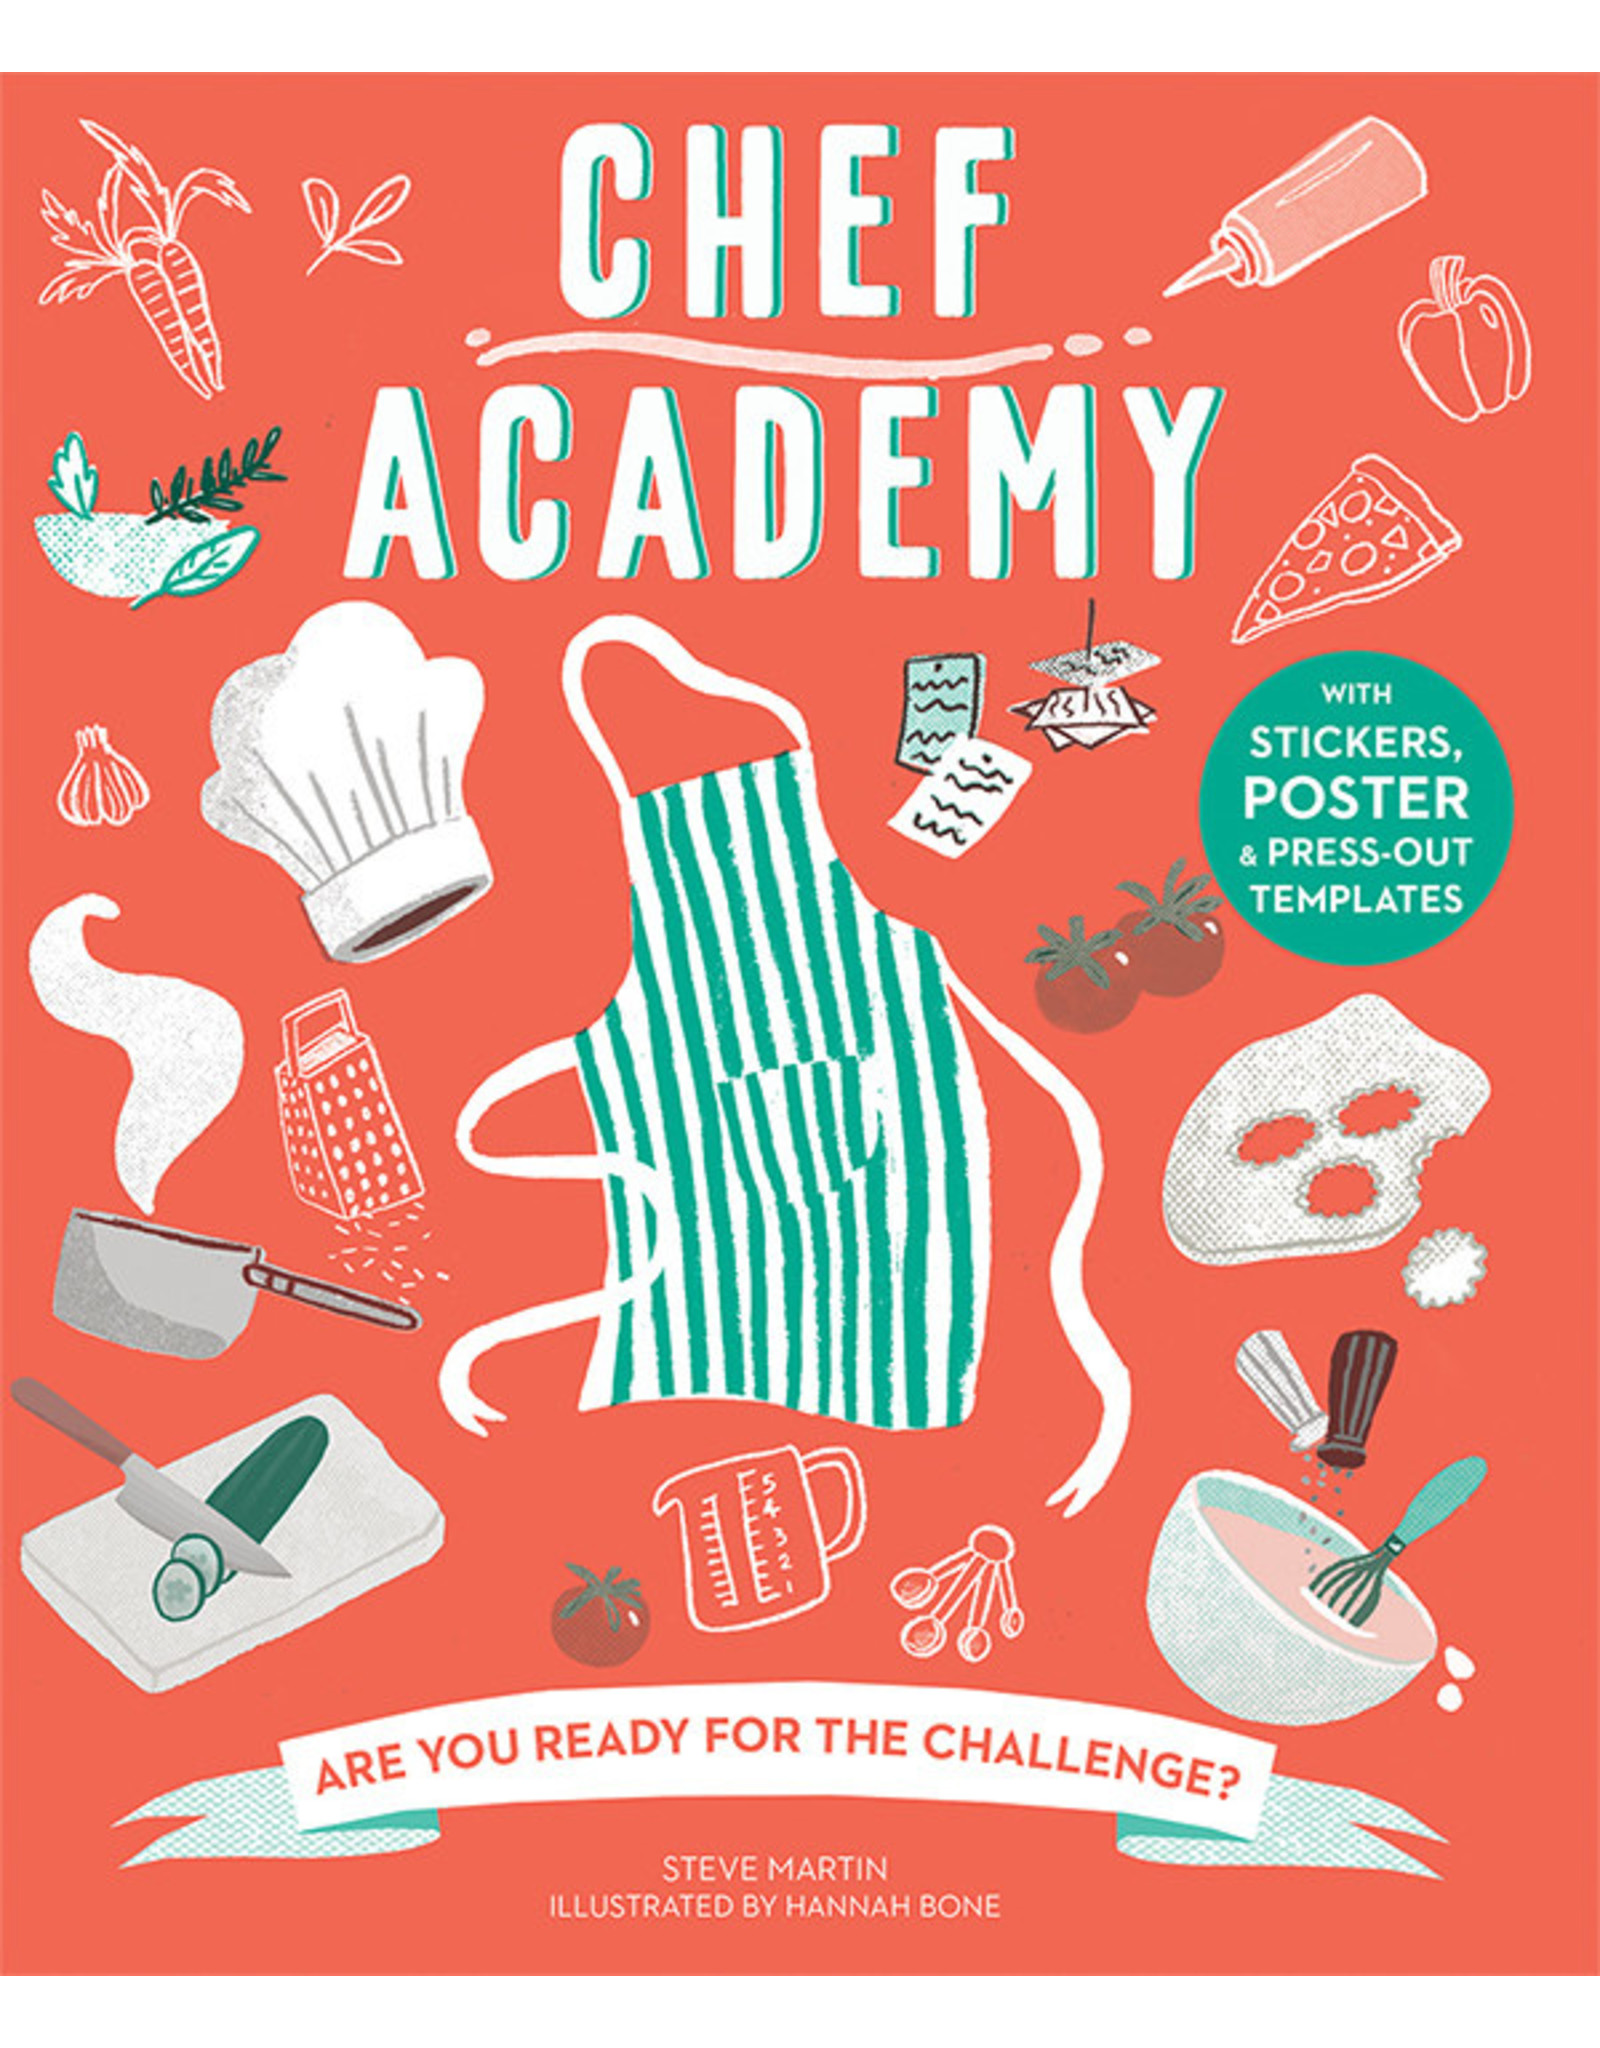 Usborne & Kane Miller Books Academy, Chef Academy